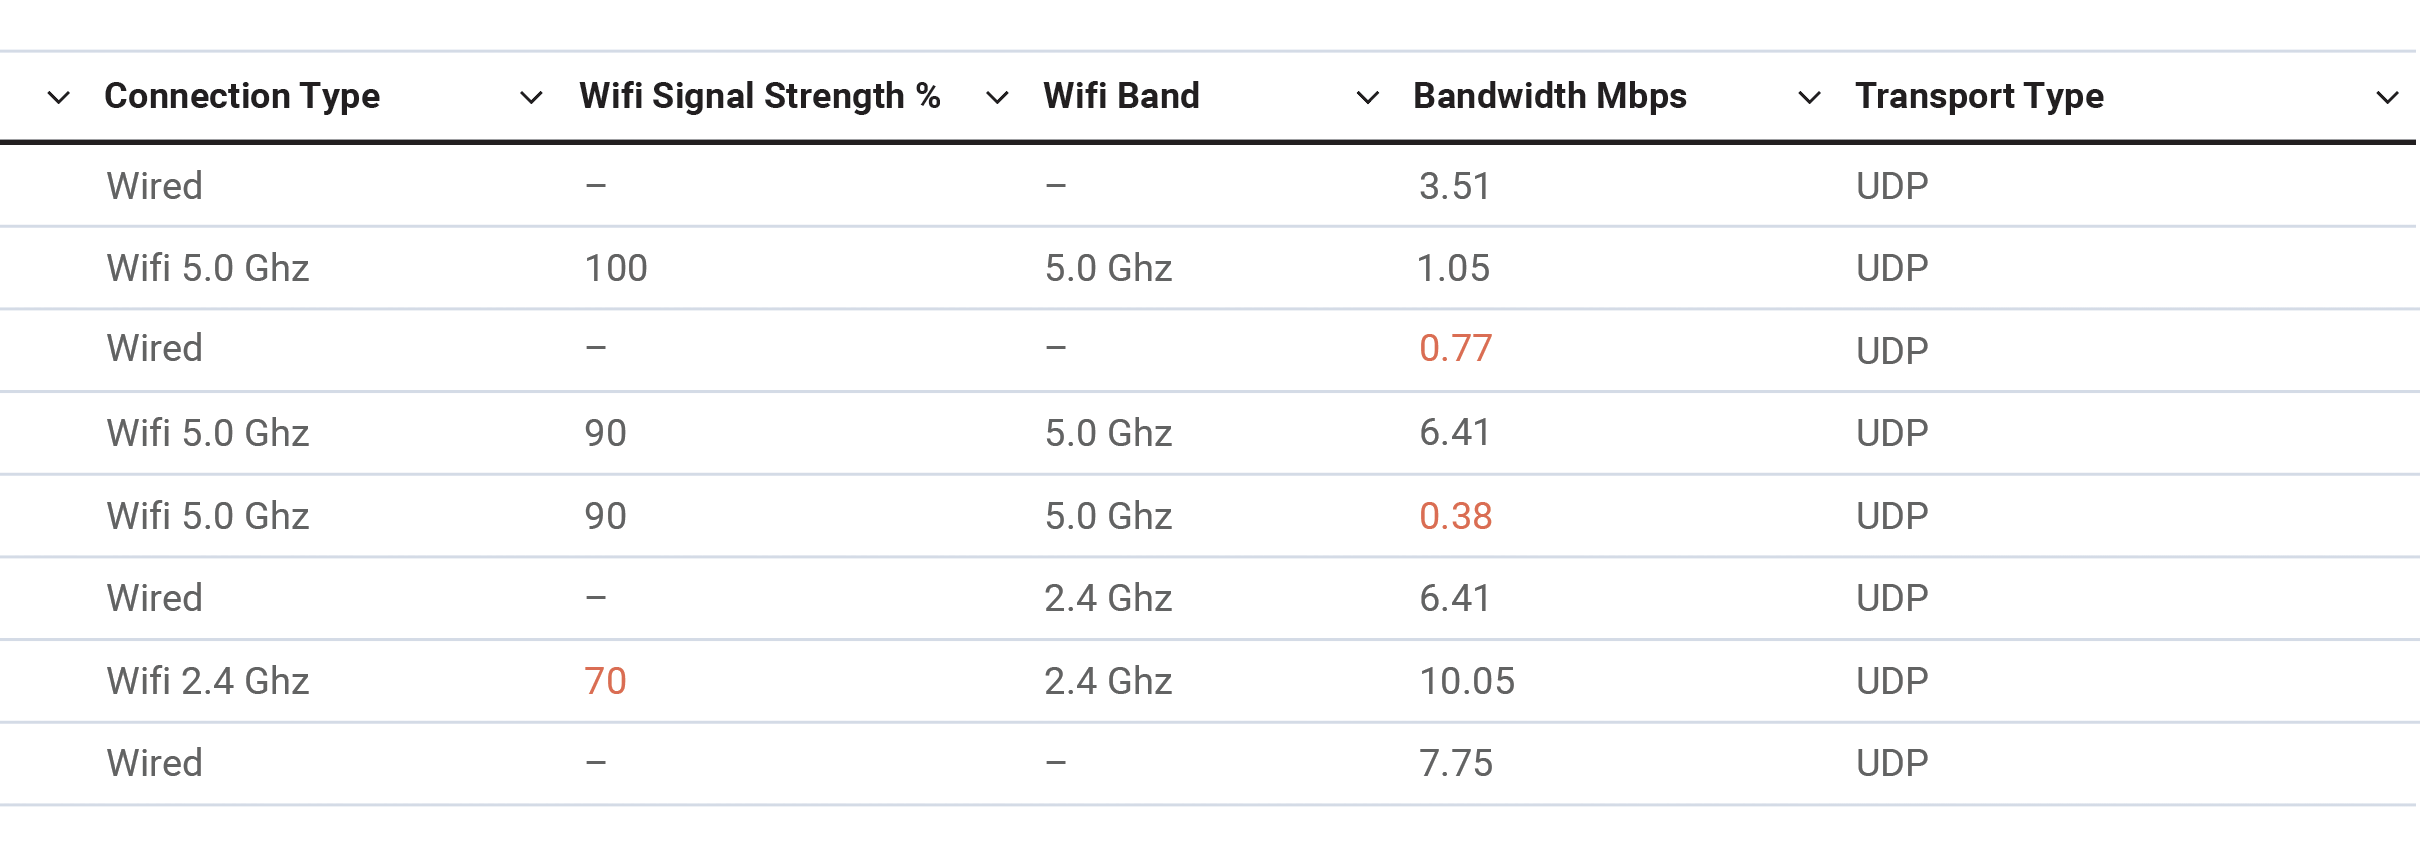 Vantage DX Wi-Fi Signal Strength (%) & Wi-Fi Band 